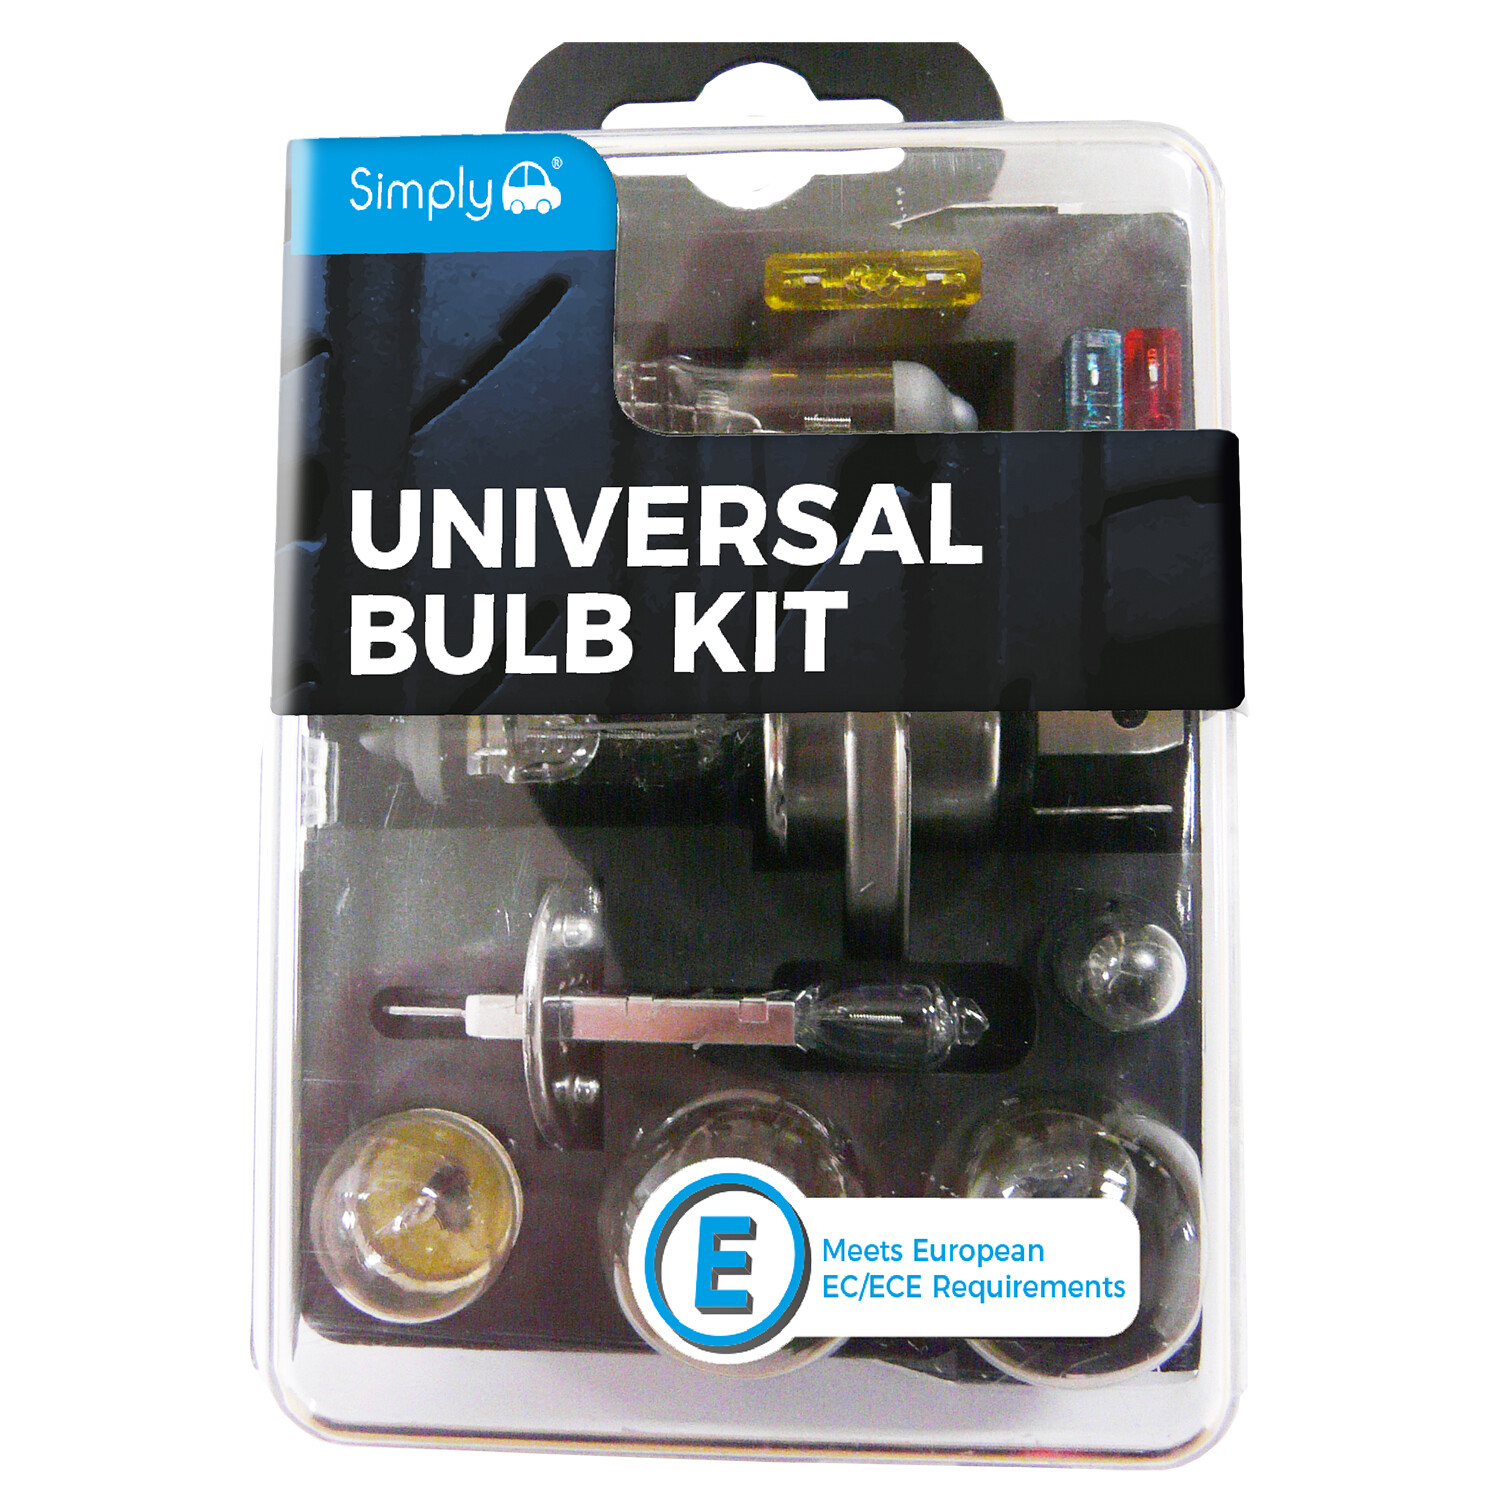 Universal Bulb Kit Image 1